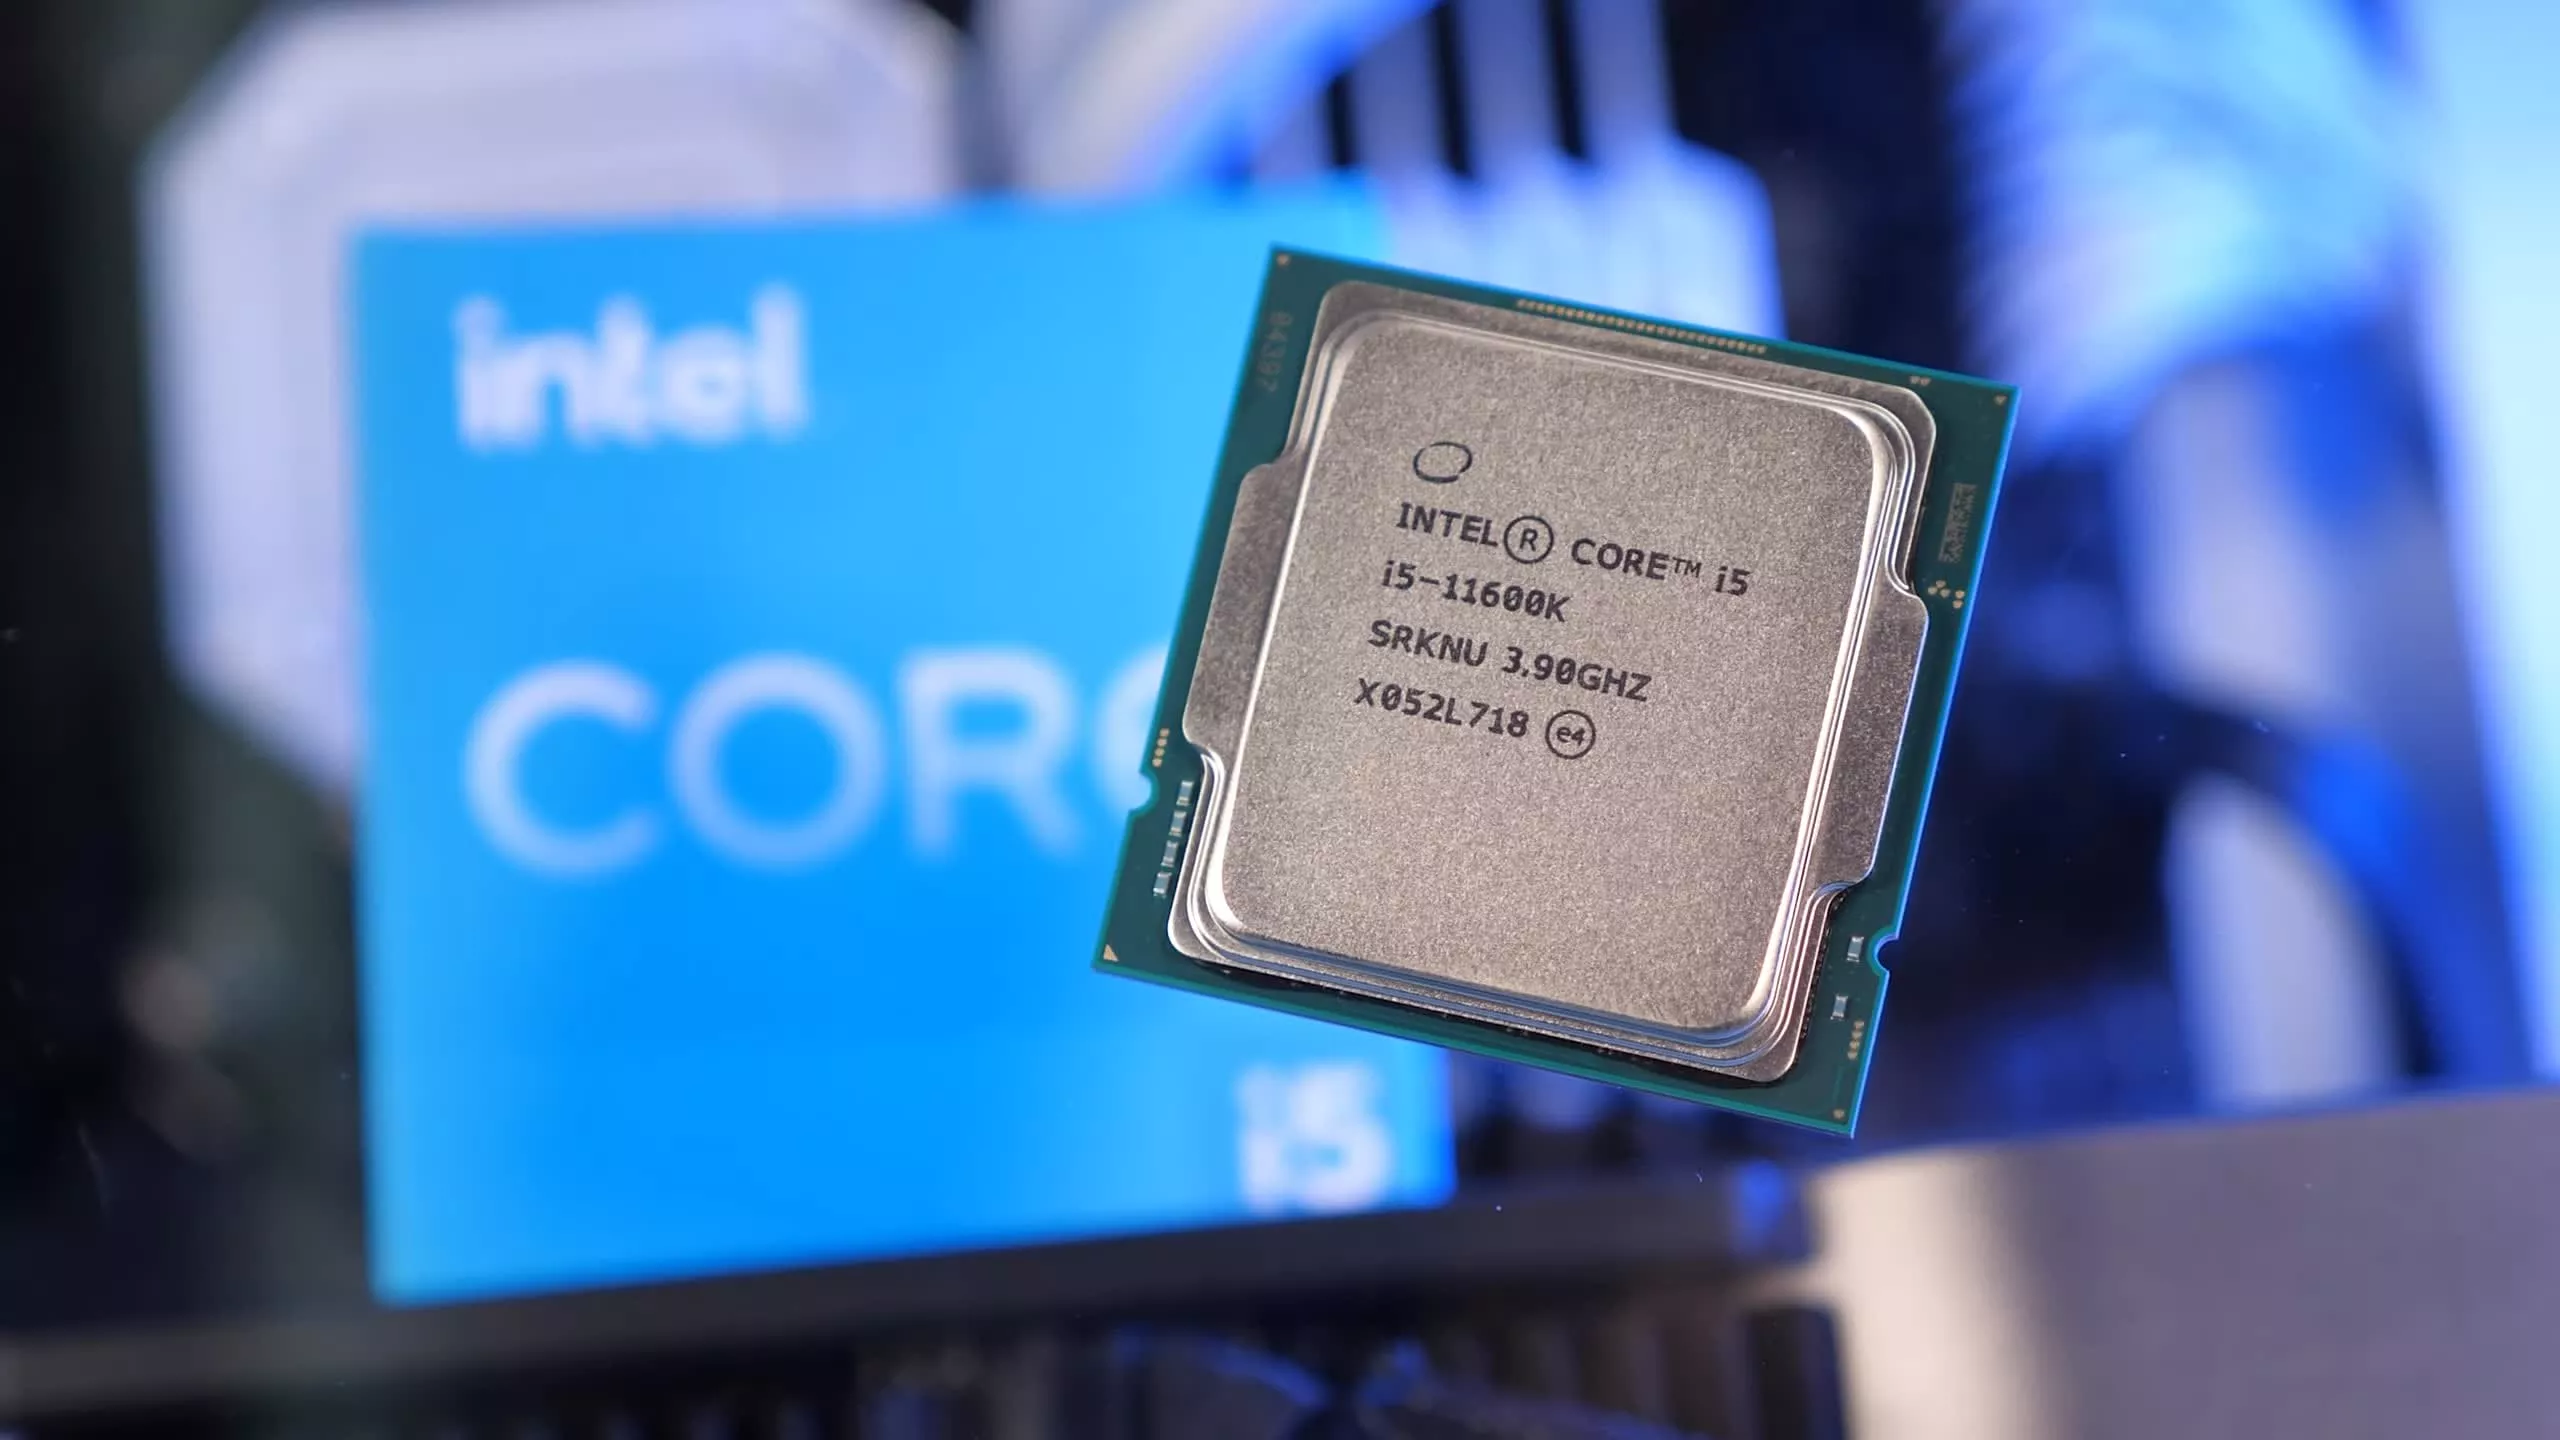 Intel core i7 сколько ядер. Процессор Intel Core i5-11600k. Intel Core i5-10600k. Процессор Intel Core i5-11400f OEM. Процессор Intel Core i5 ДНС.